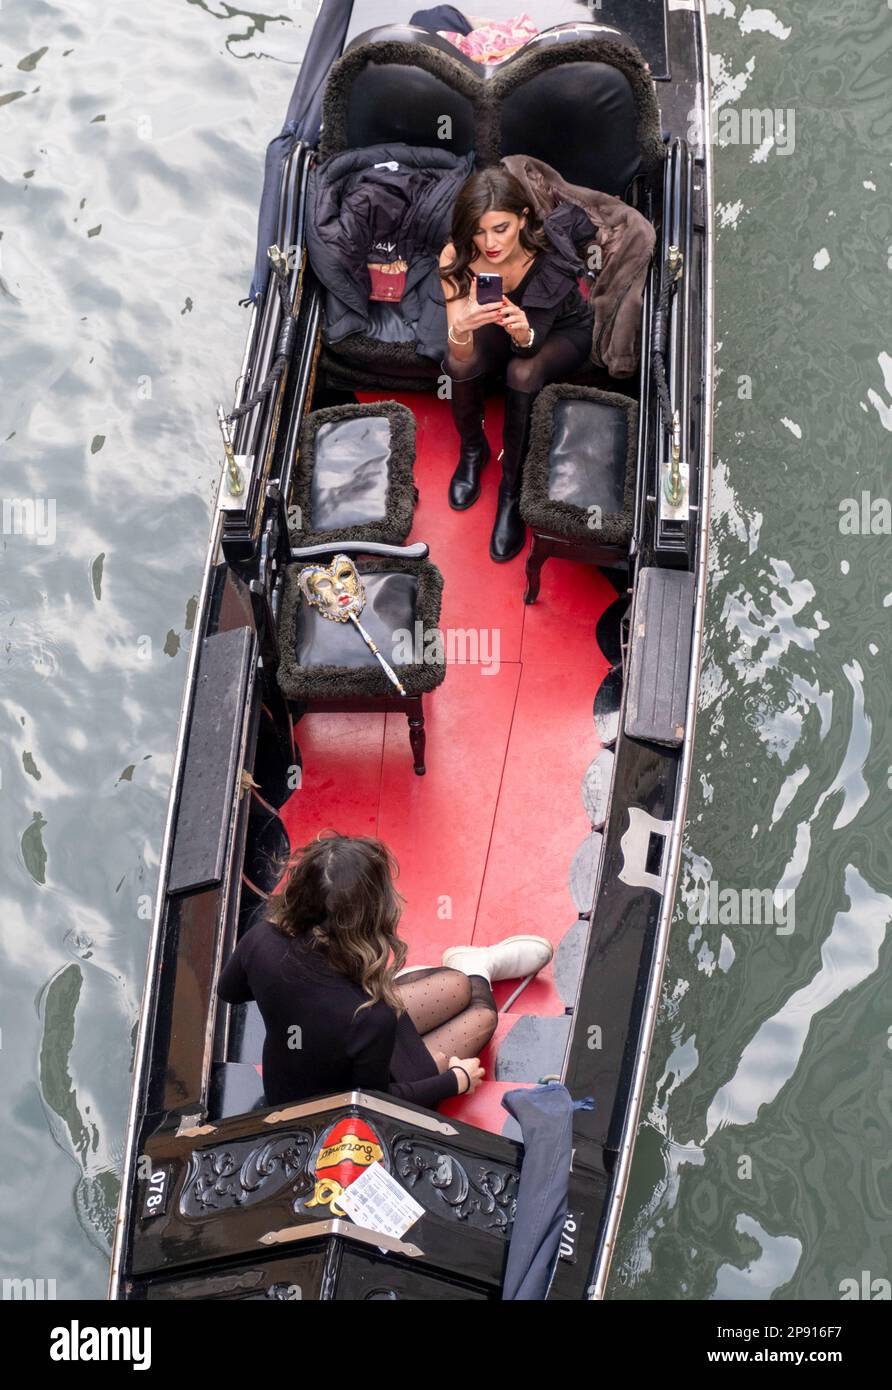 Two women in a Gondola, Venice, Italy Stock Photo